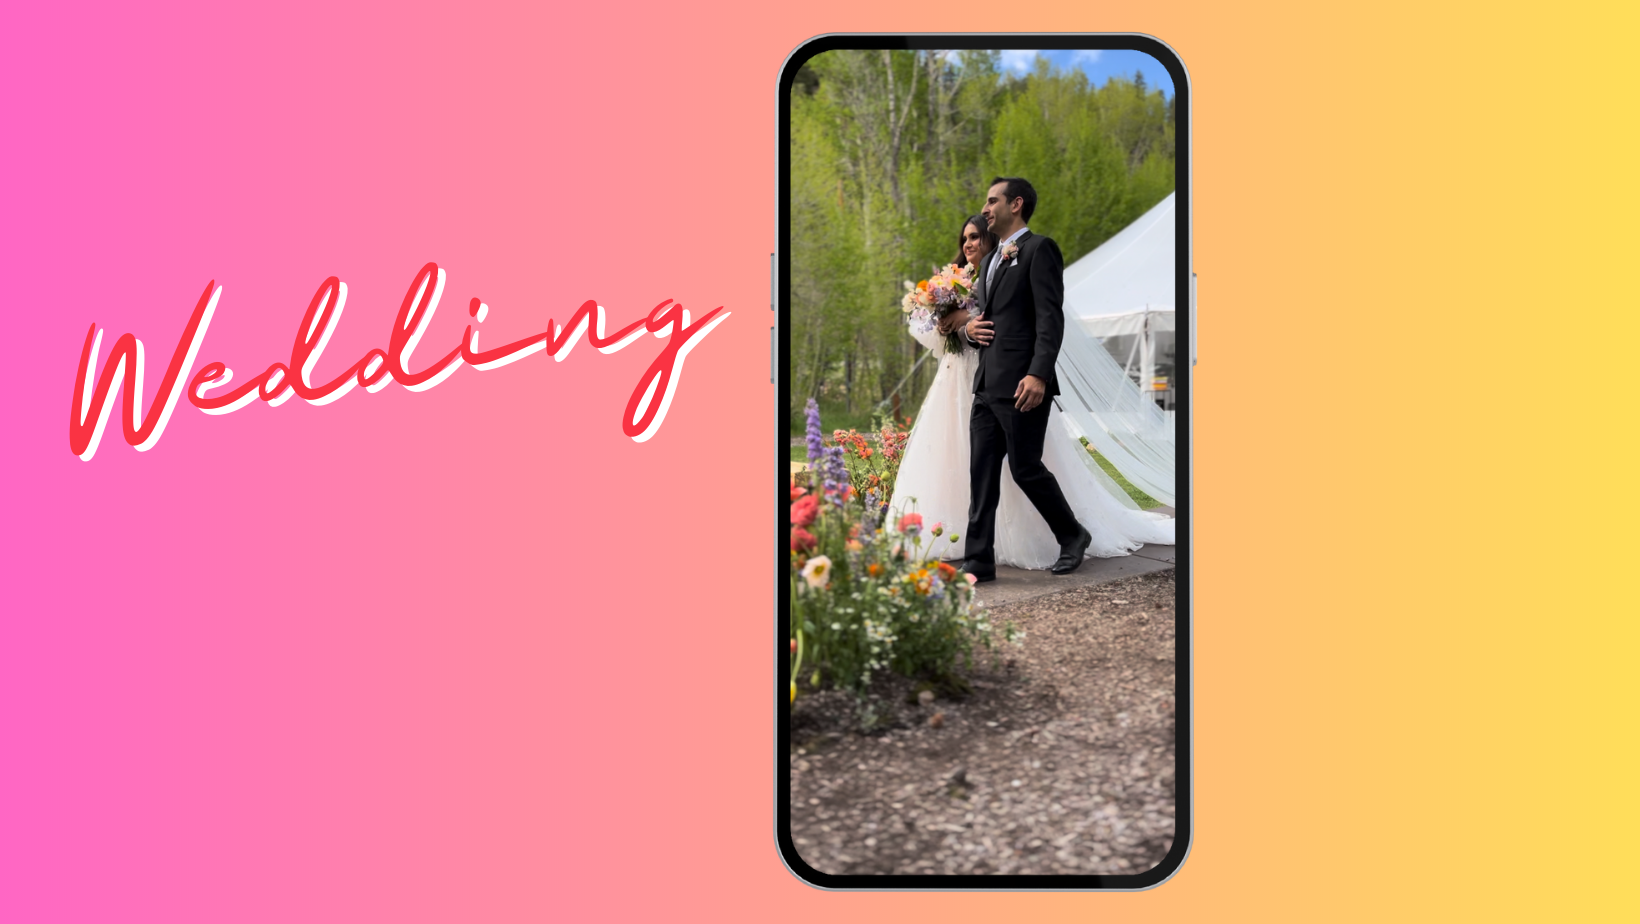 Load video: wedding video filmed on iphone